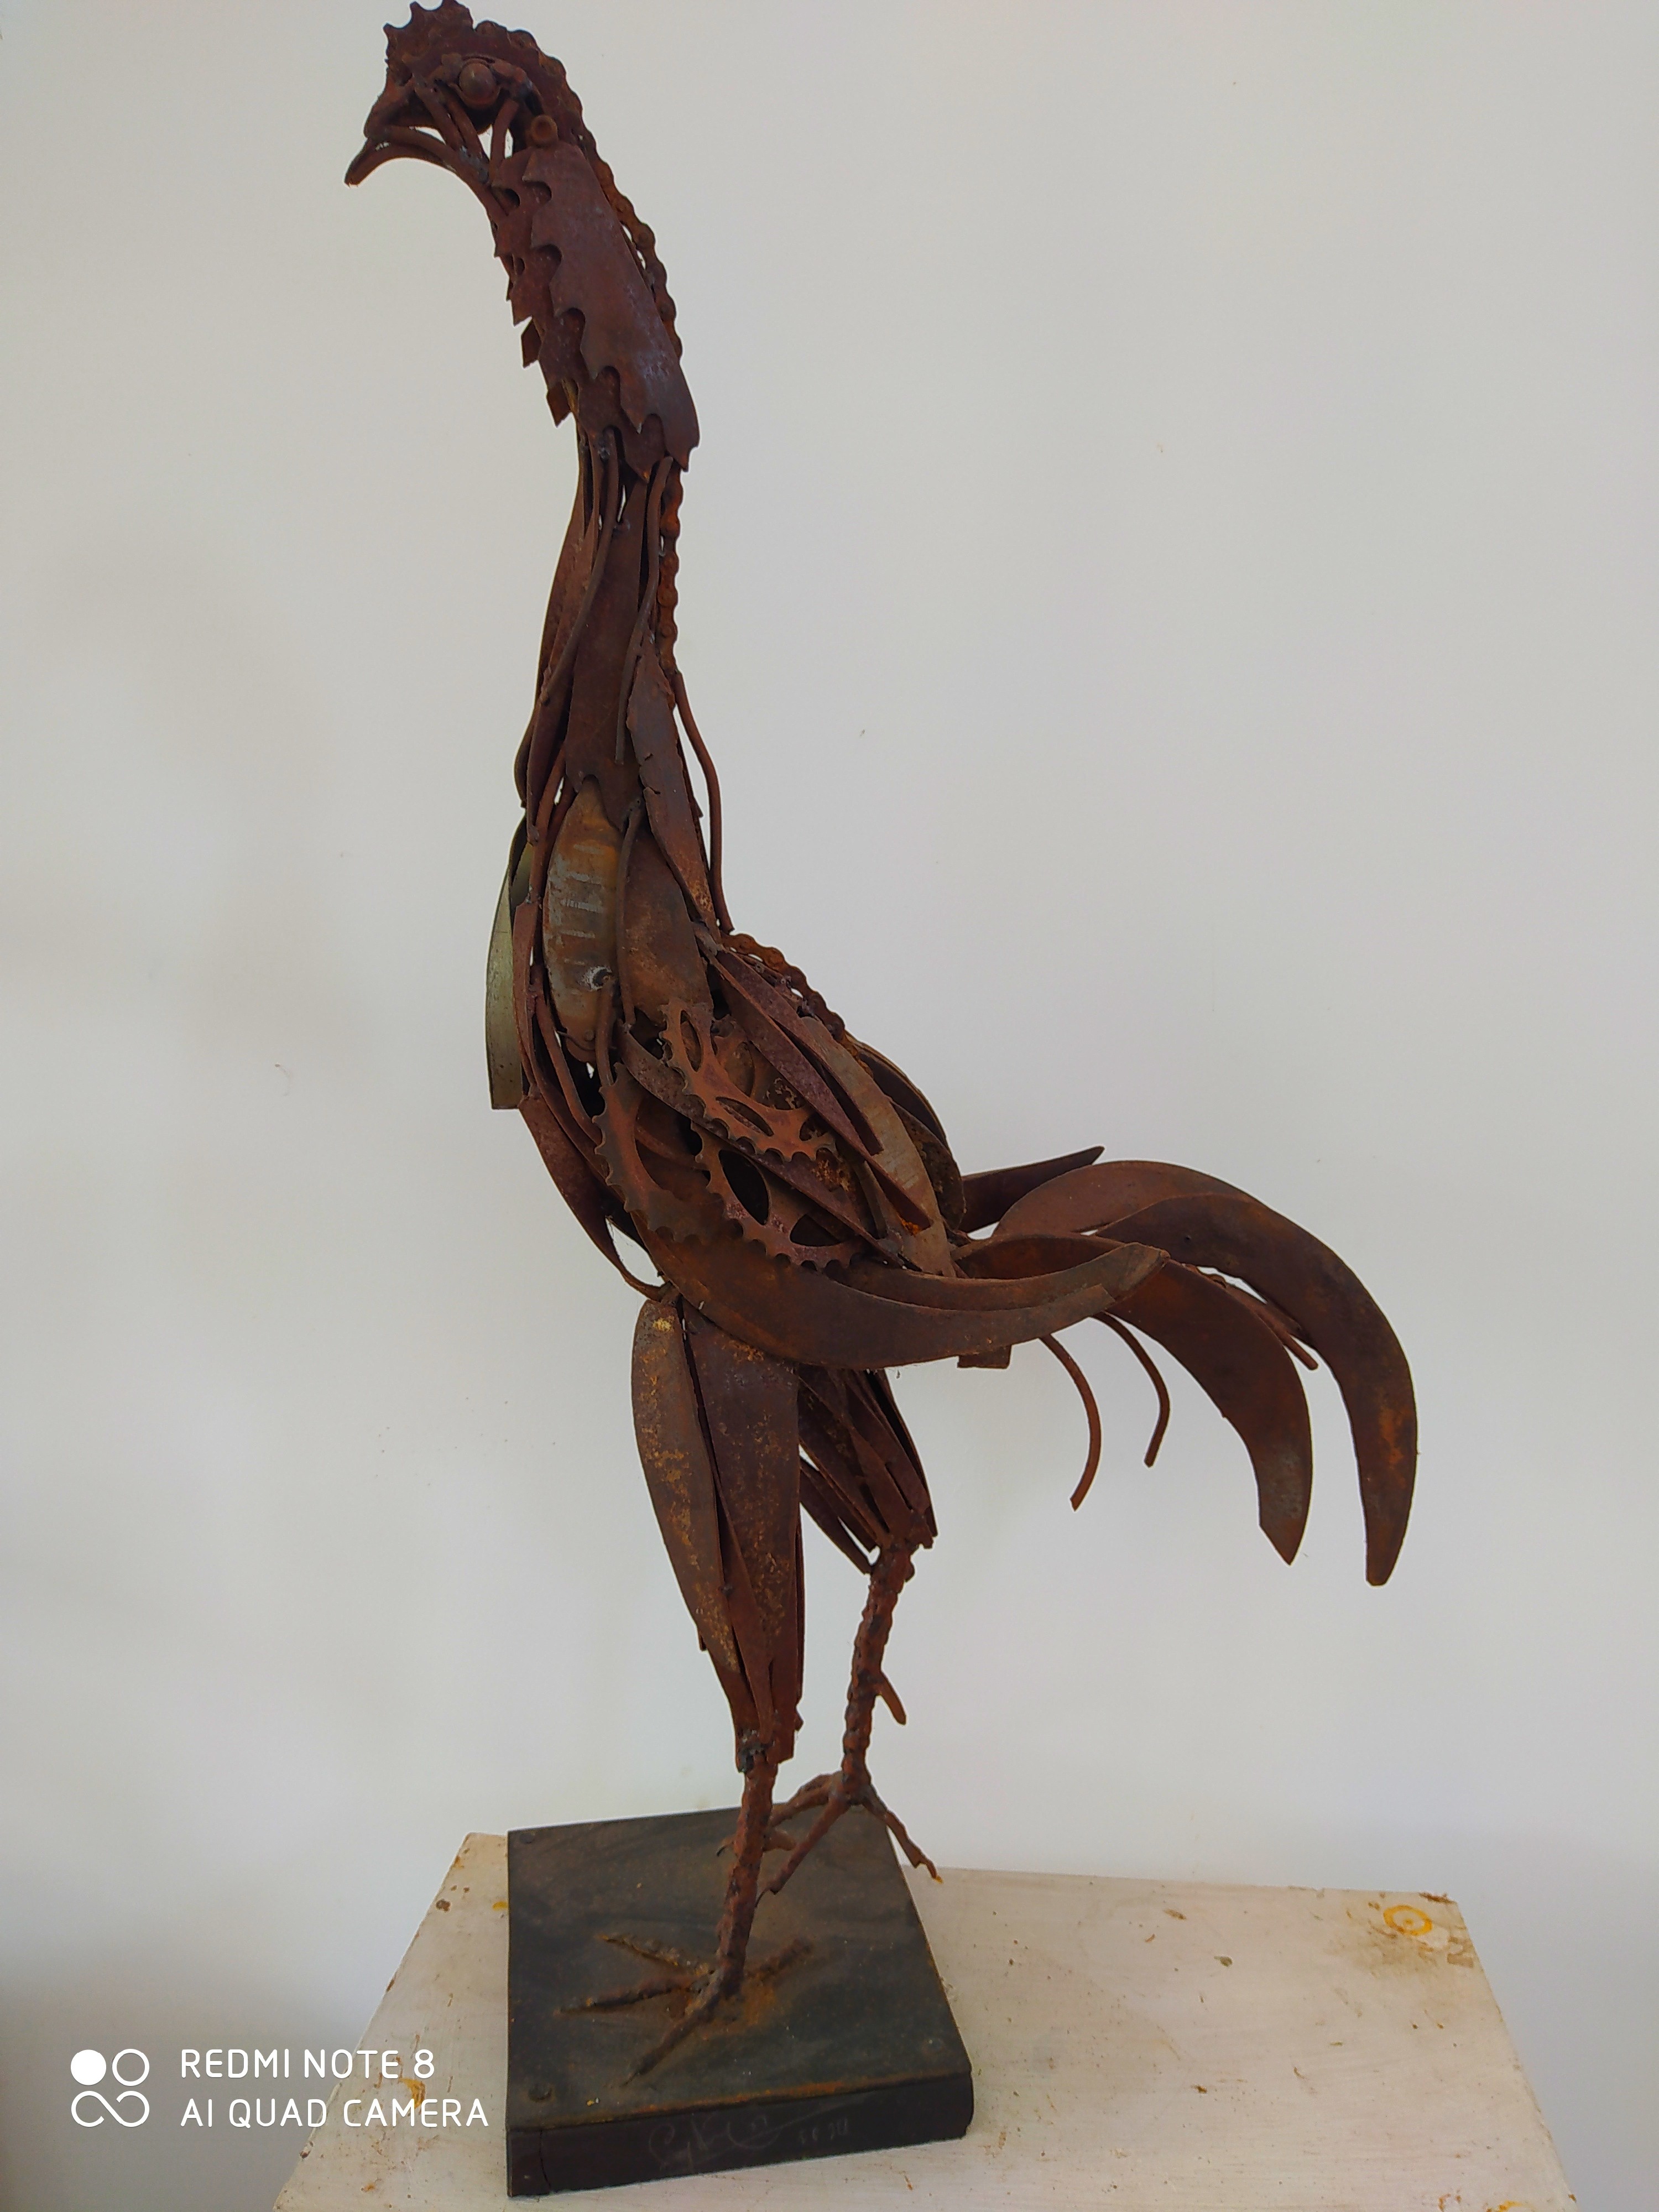 Rooster by Chandana Gunathilake